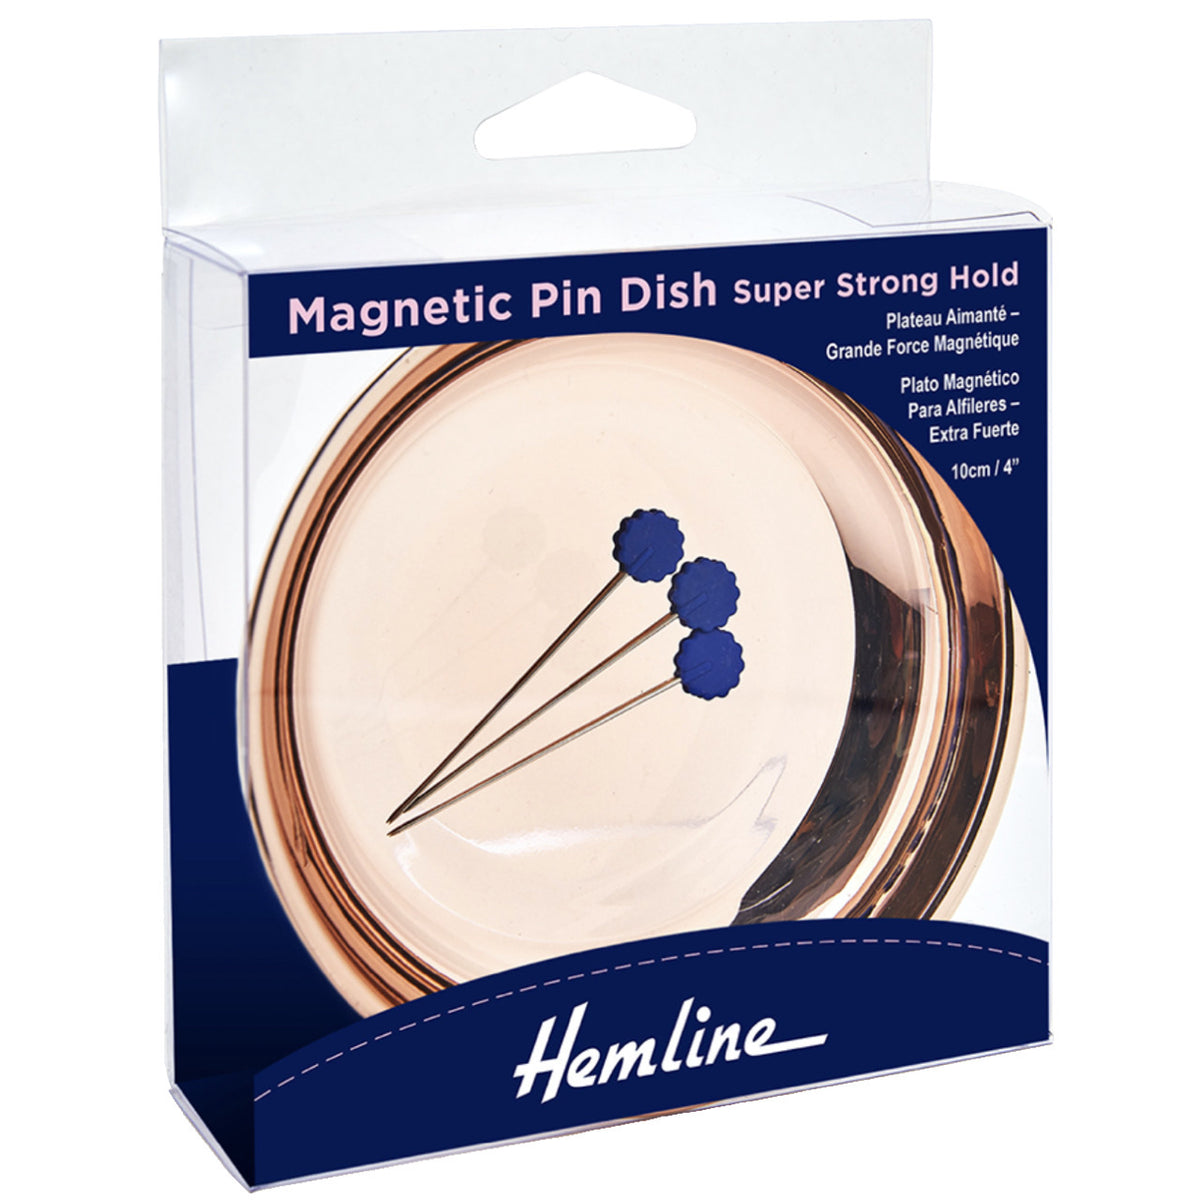 Magnetic Pin Bowl